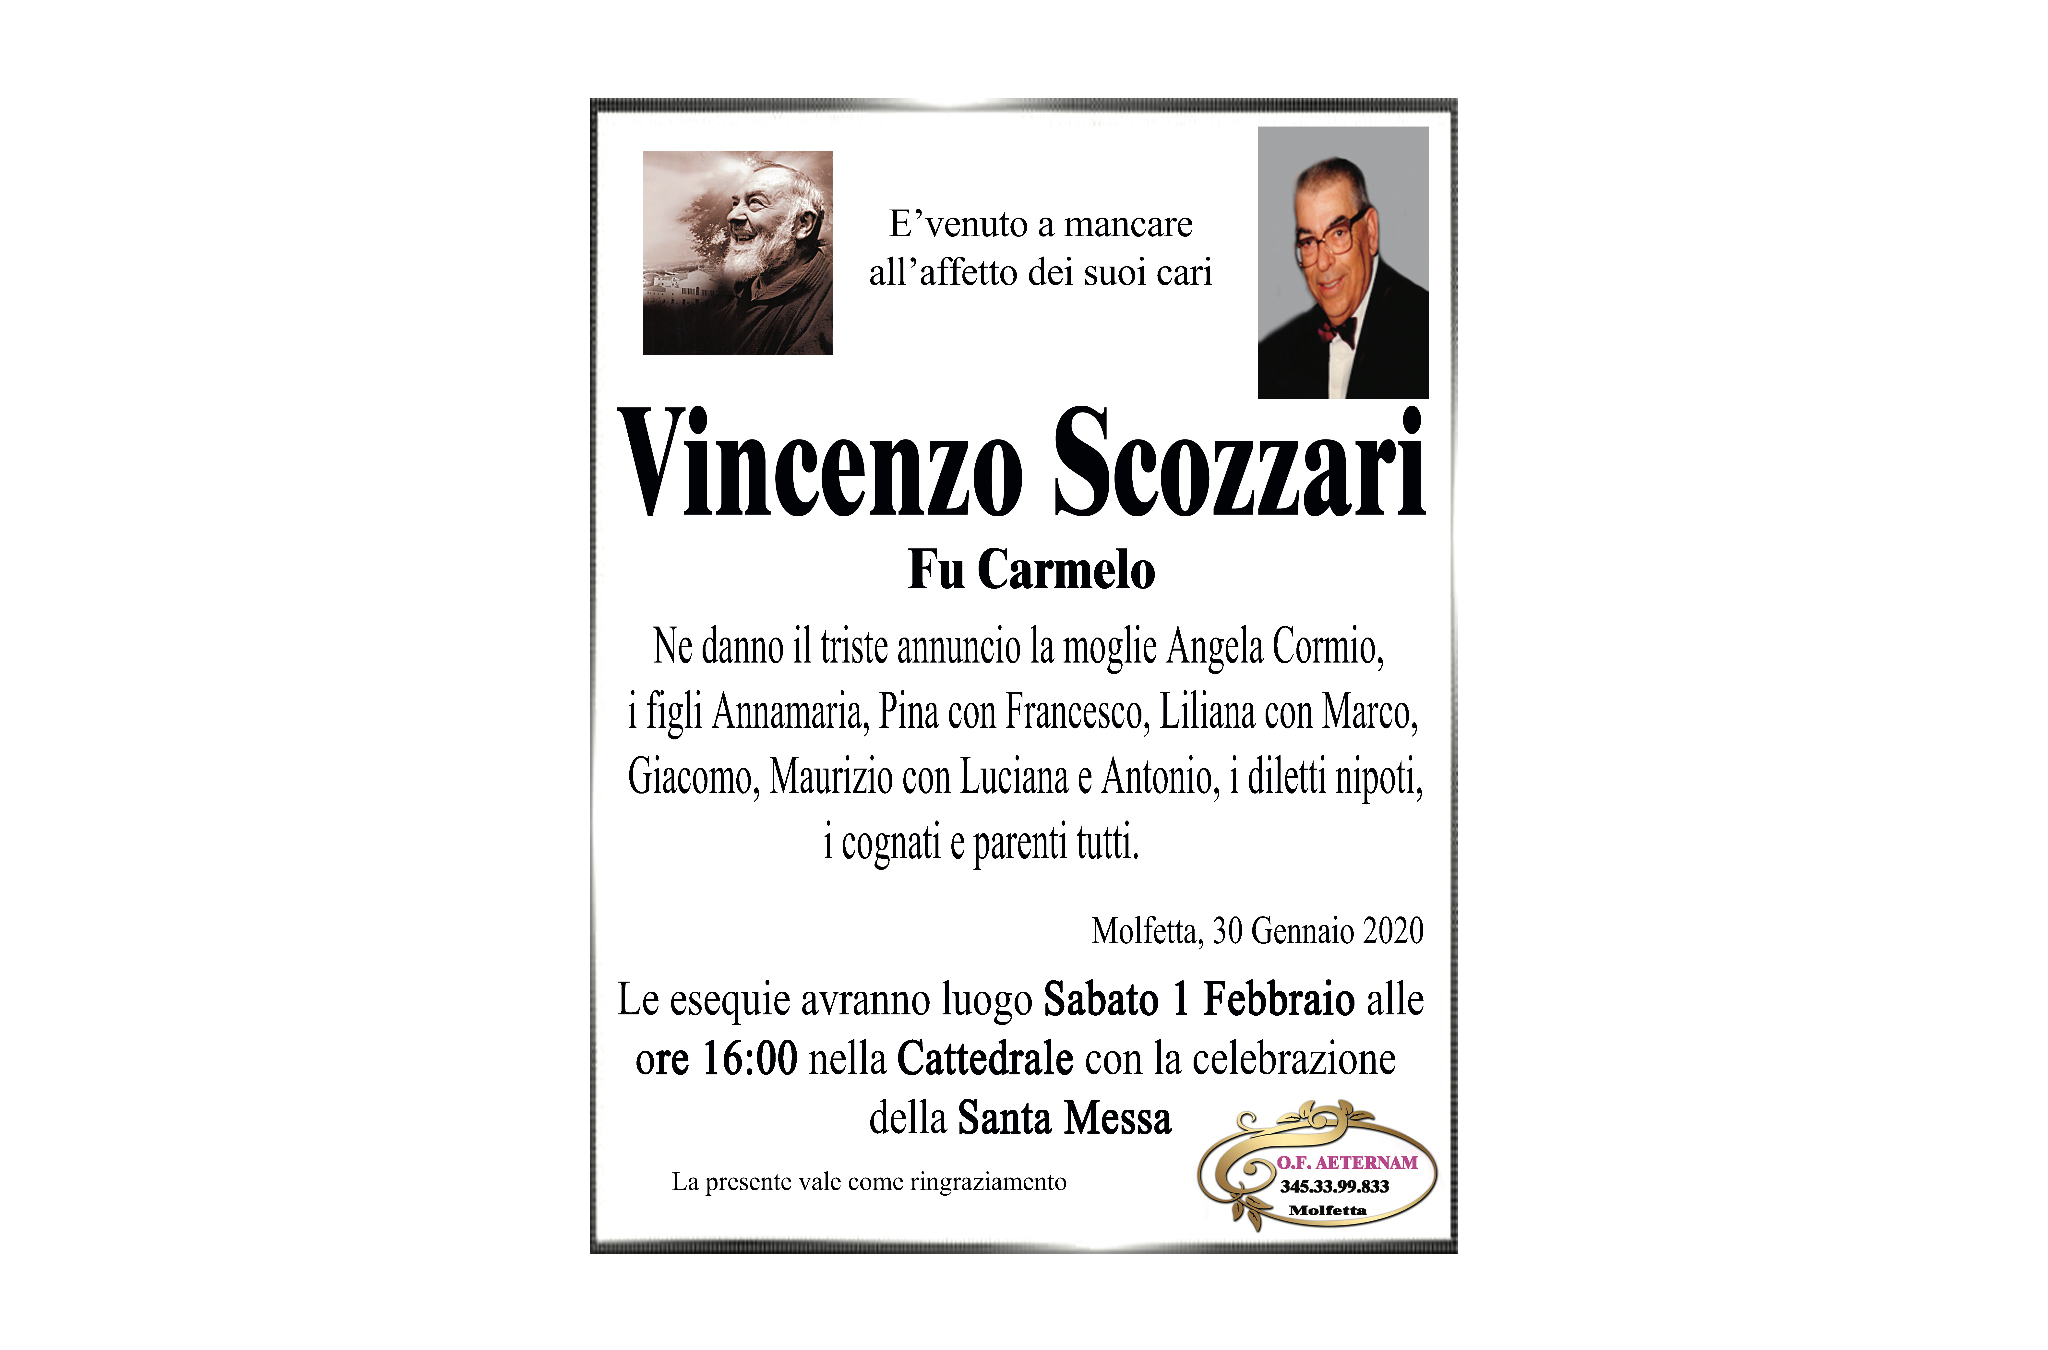 Vincenzo Scozzari